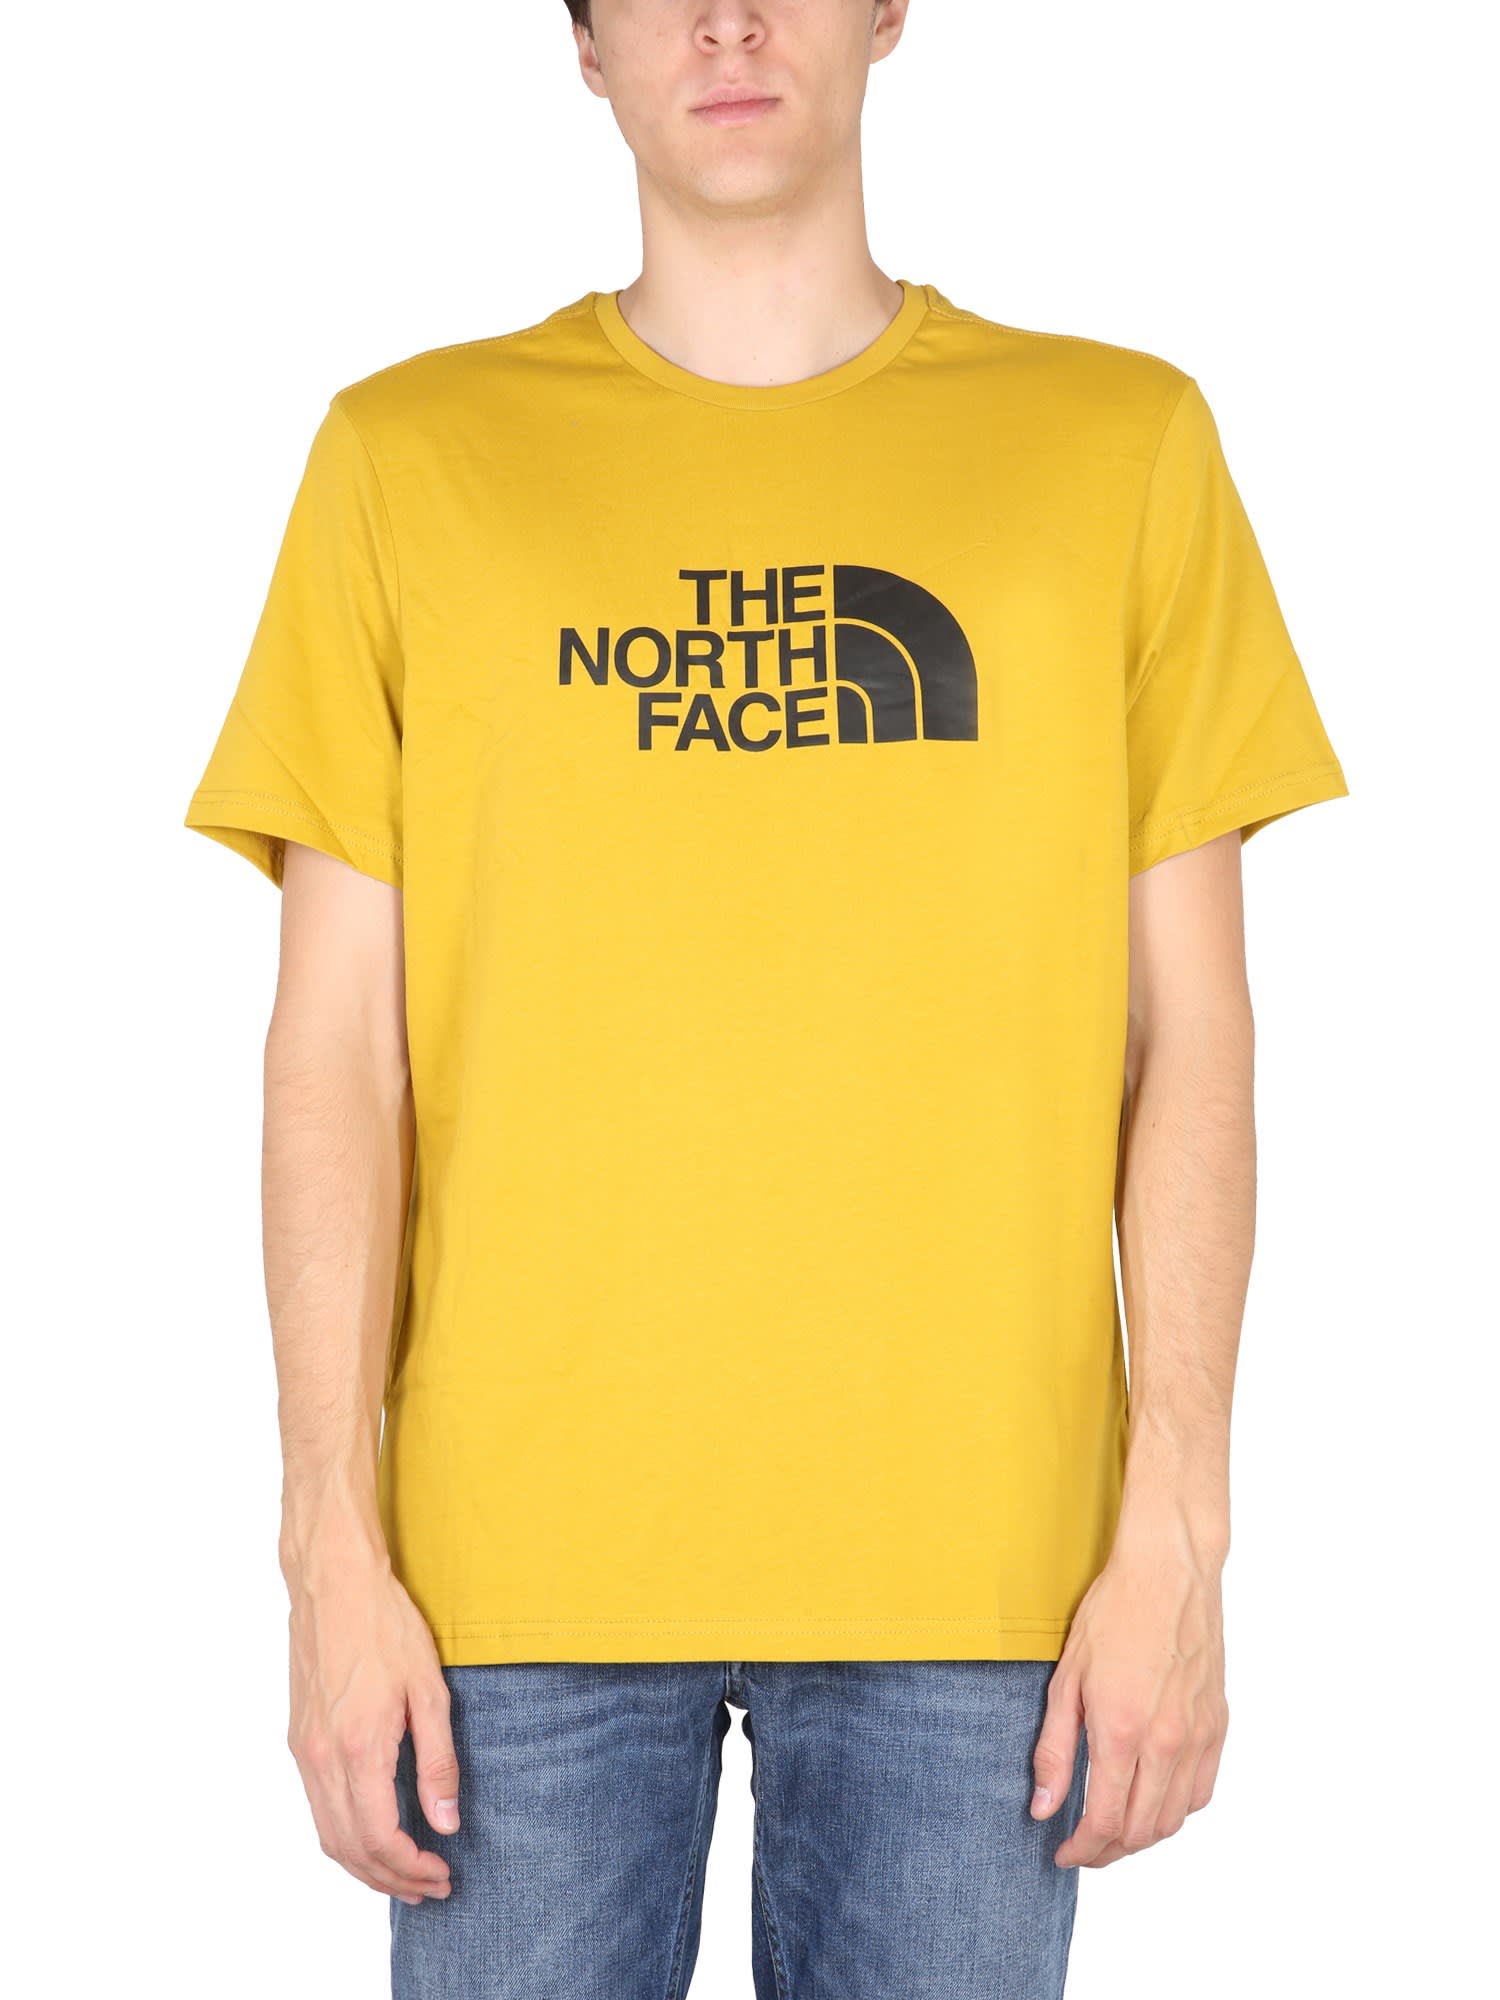 THE NORTH FACE CREWNECK T-SHIRT